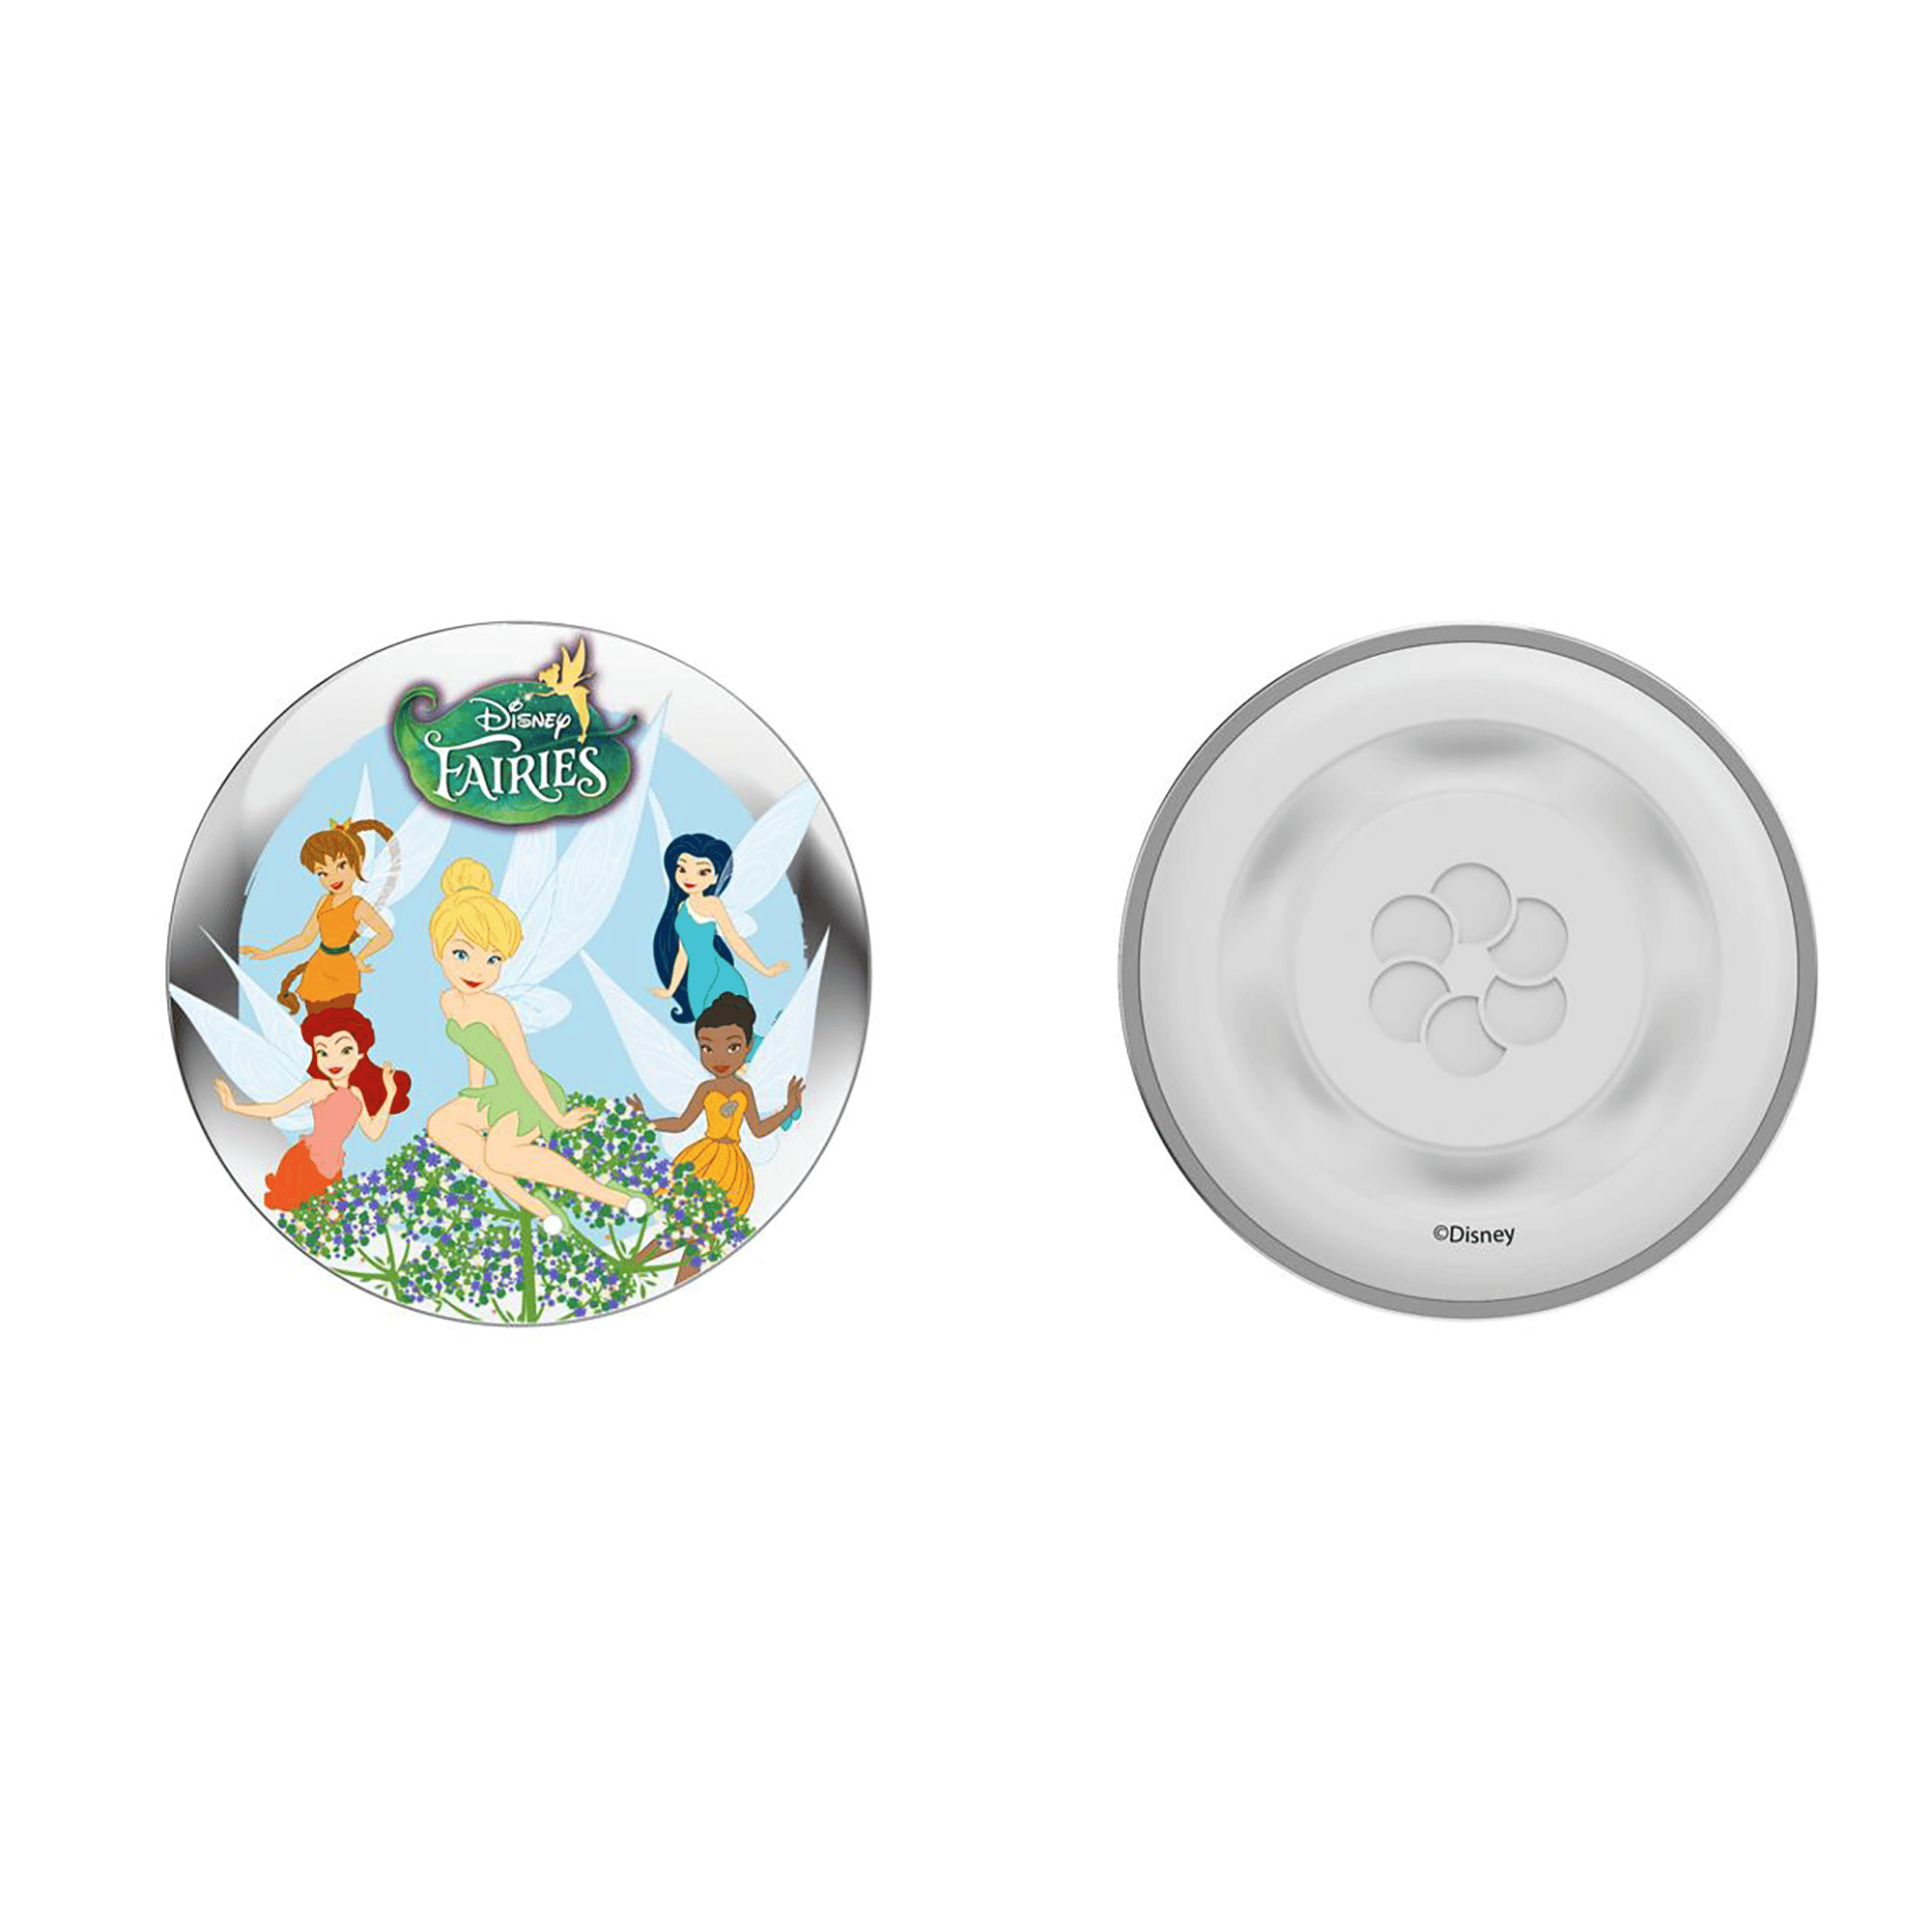 StoryShield Disney Collection - Tinker Bell onanoff Grün 2000583660903 2